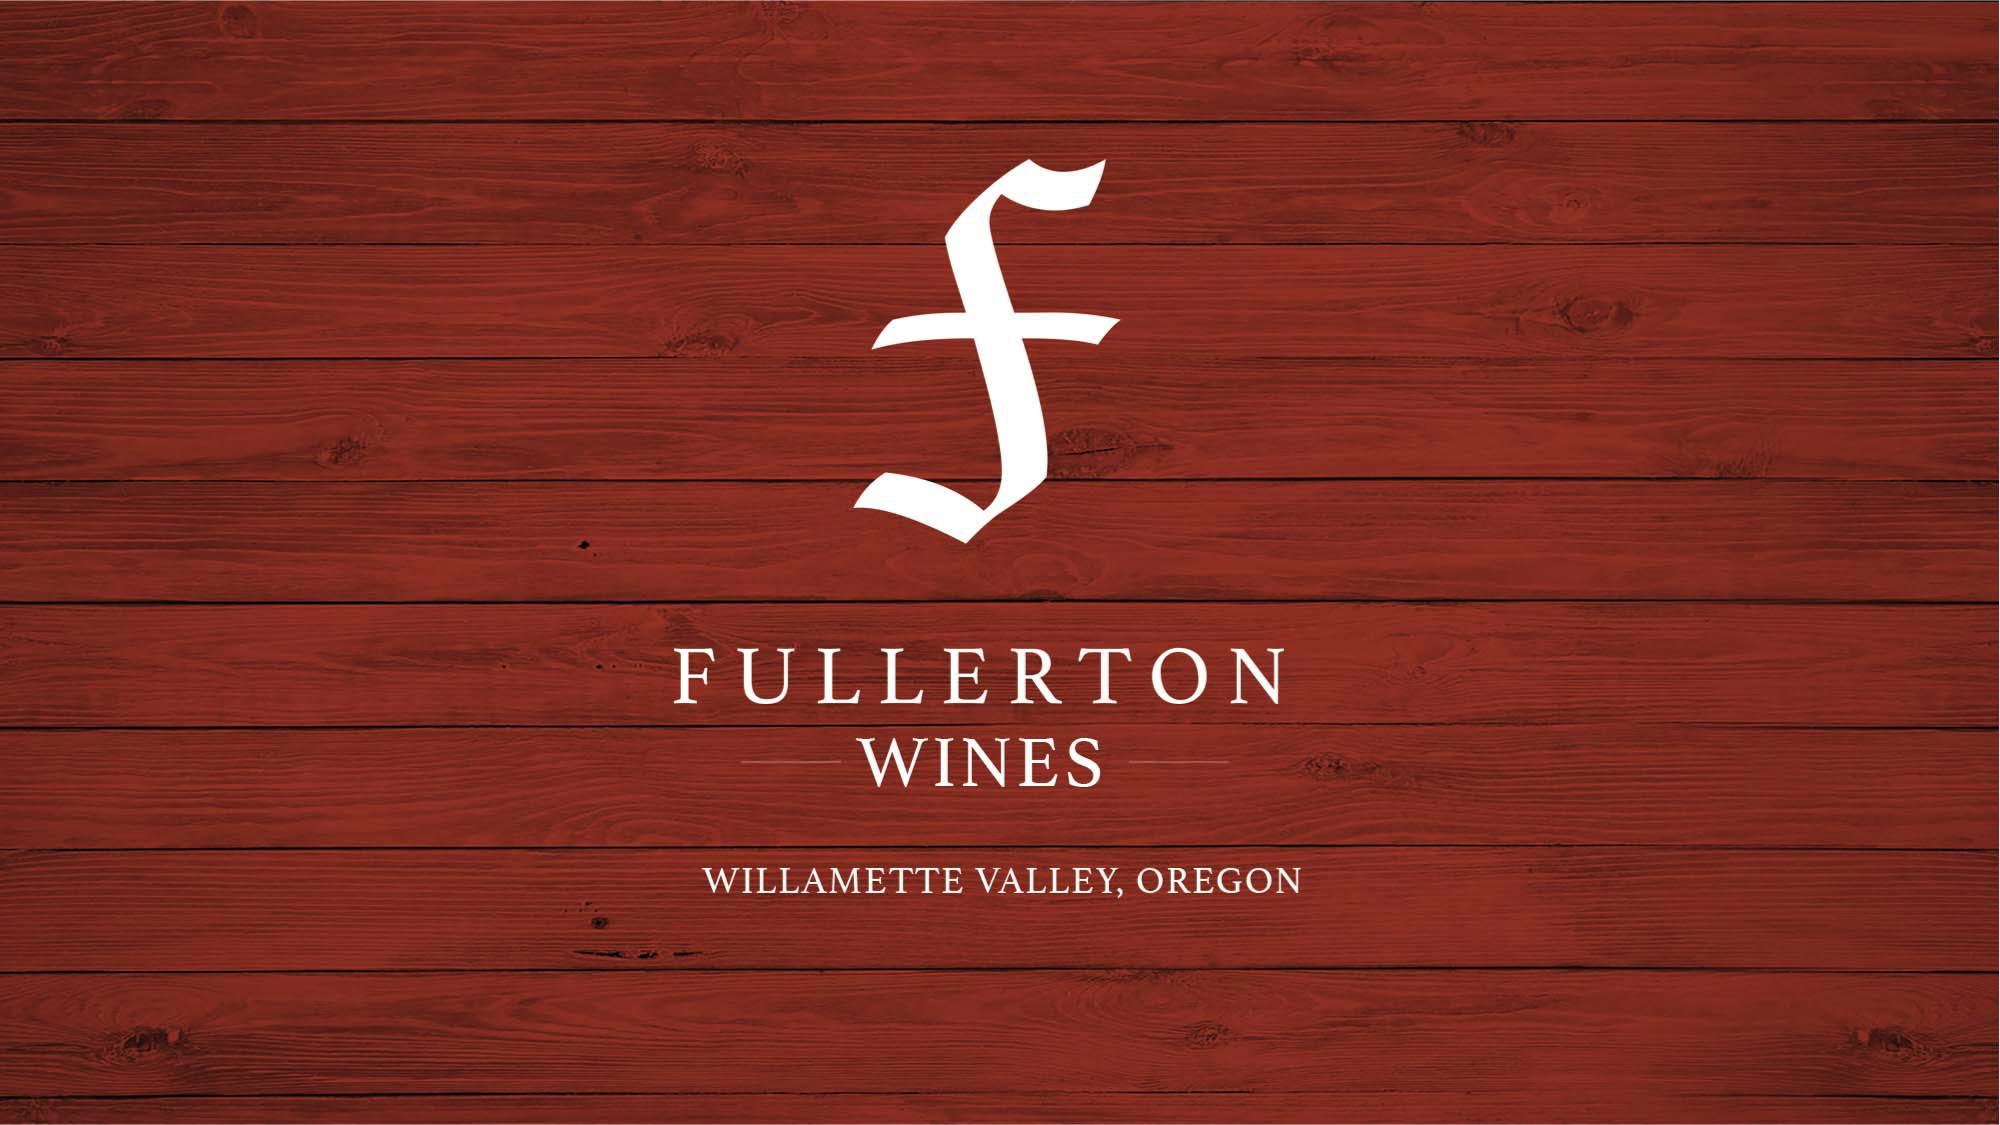 Fullerton Wine Bar and Tasting Room